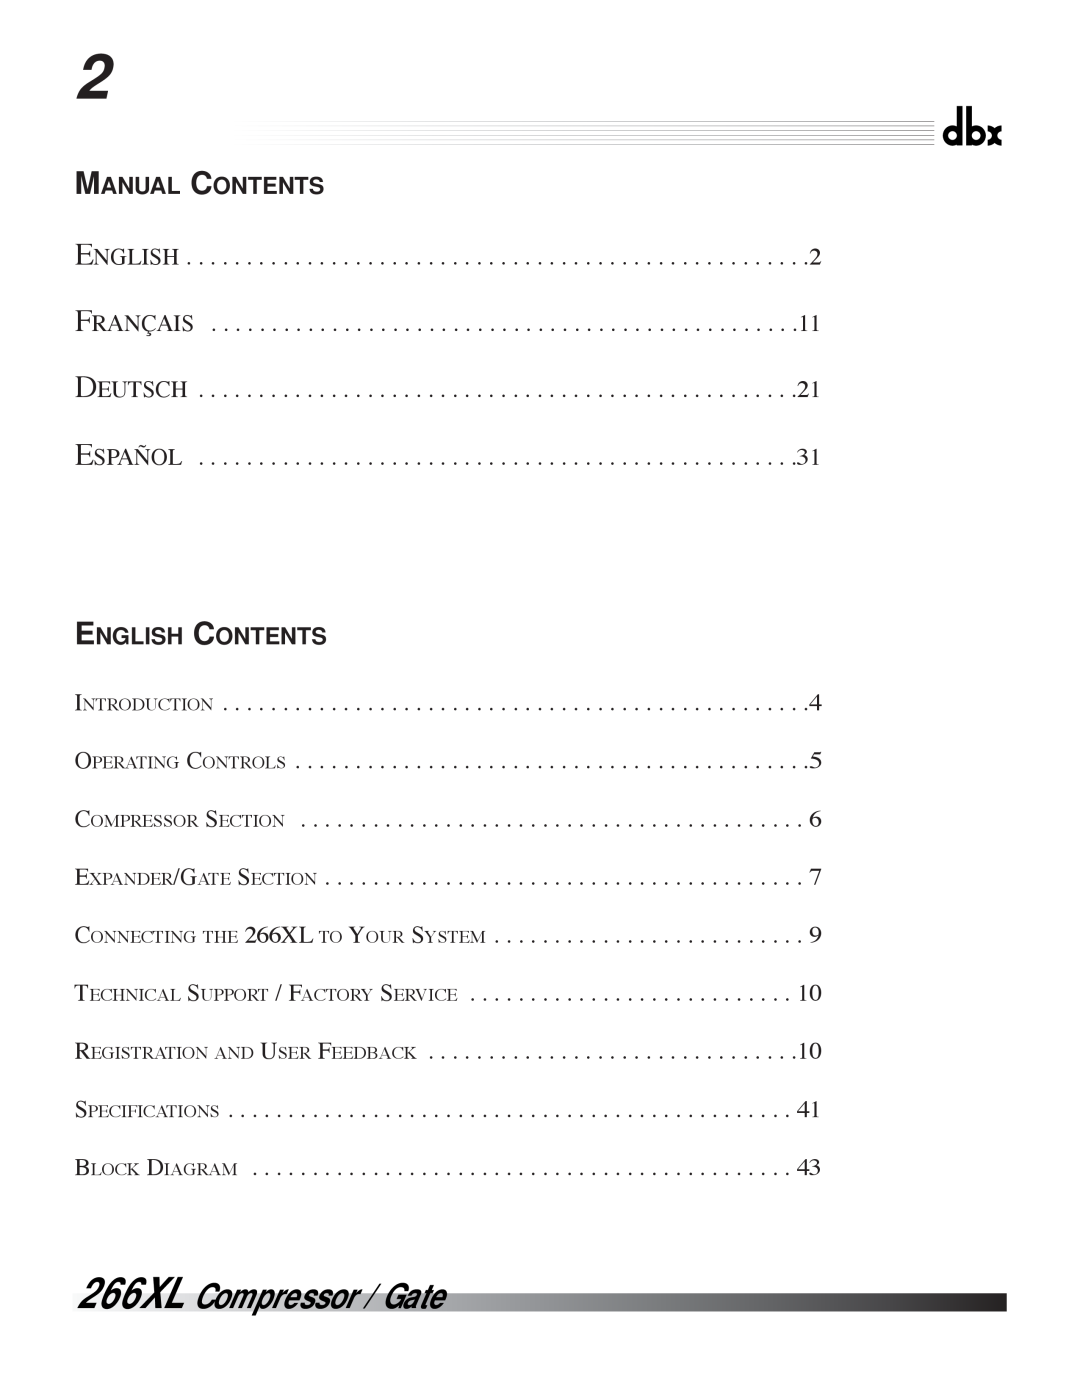 dbx Pro 266XL Manual Contents, English Français Deutsch Español, English Contents, Registration And User Feedback 